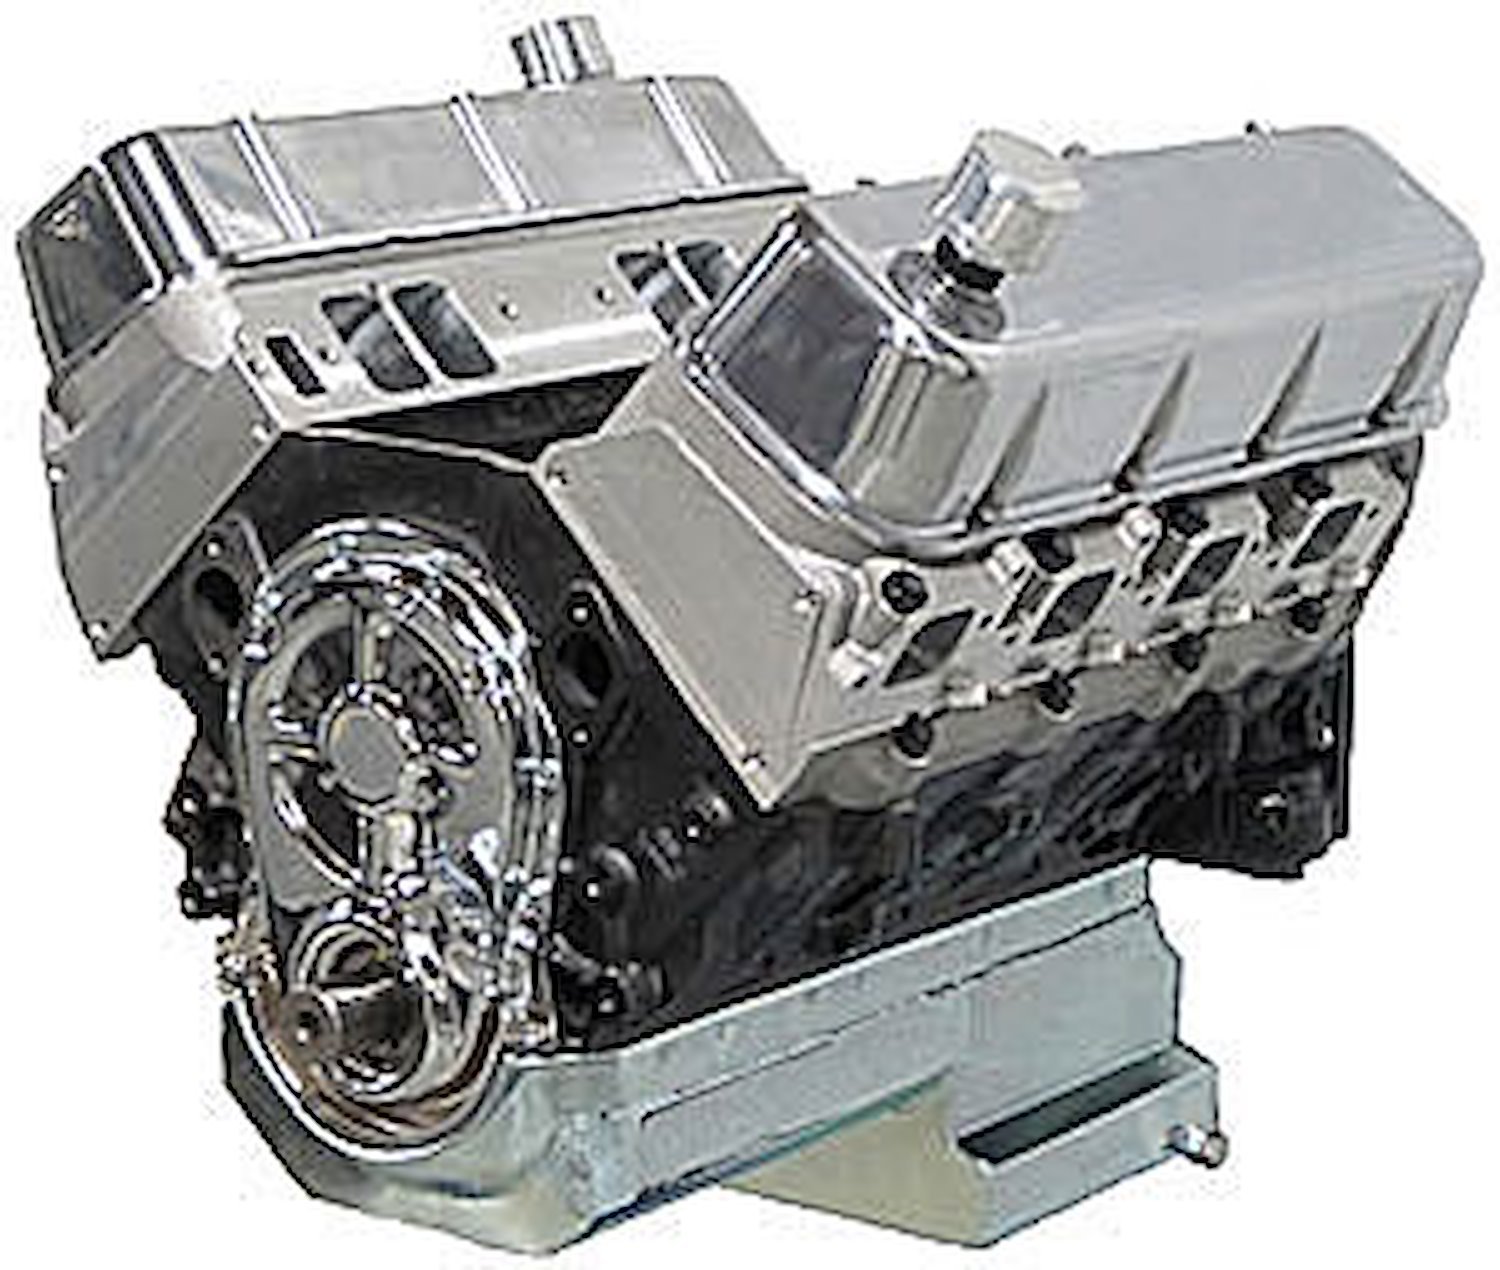 Pro Series Big Block Chevy 540ci/670HP/660TQ Base Engine